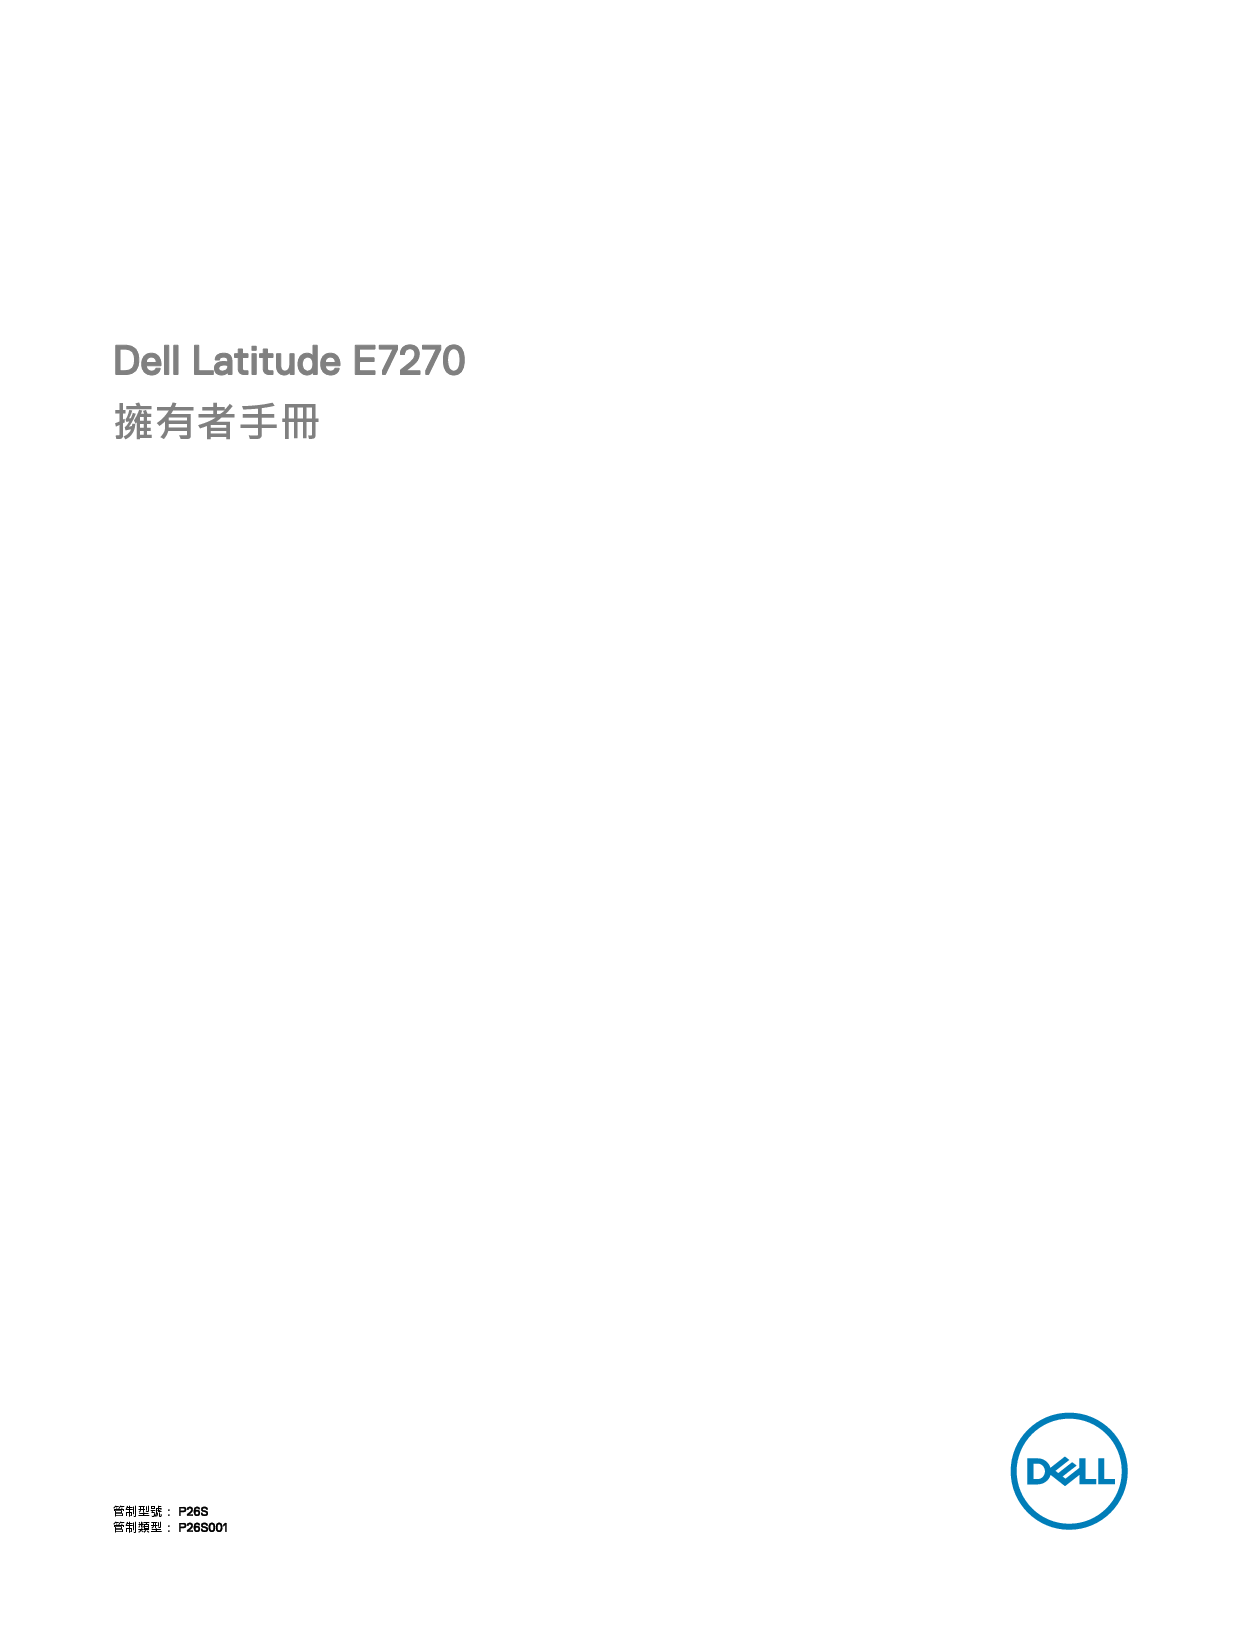 戴尔 Dell Latitude E7270 繁体 用户手册 封面